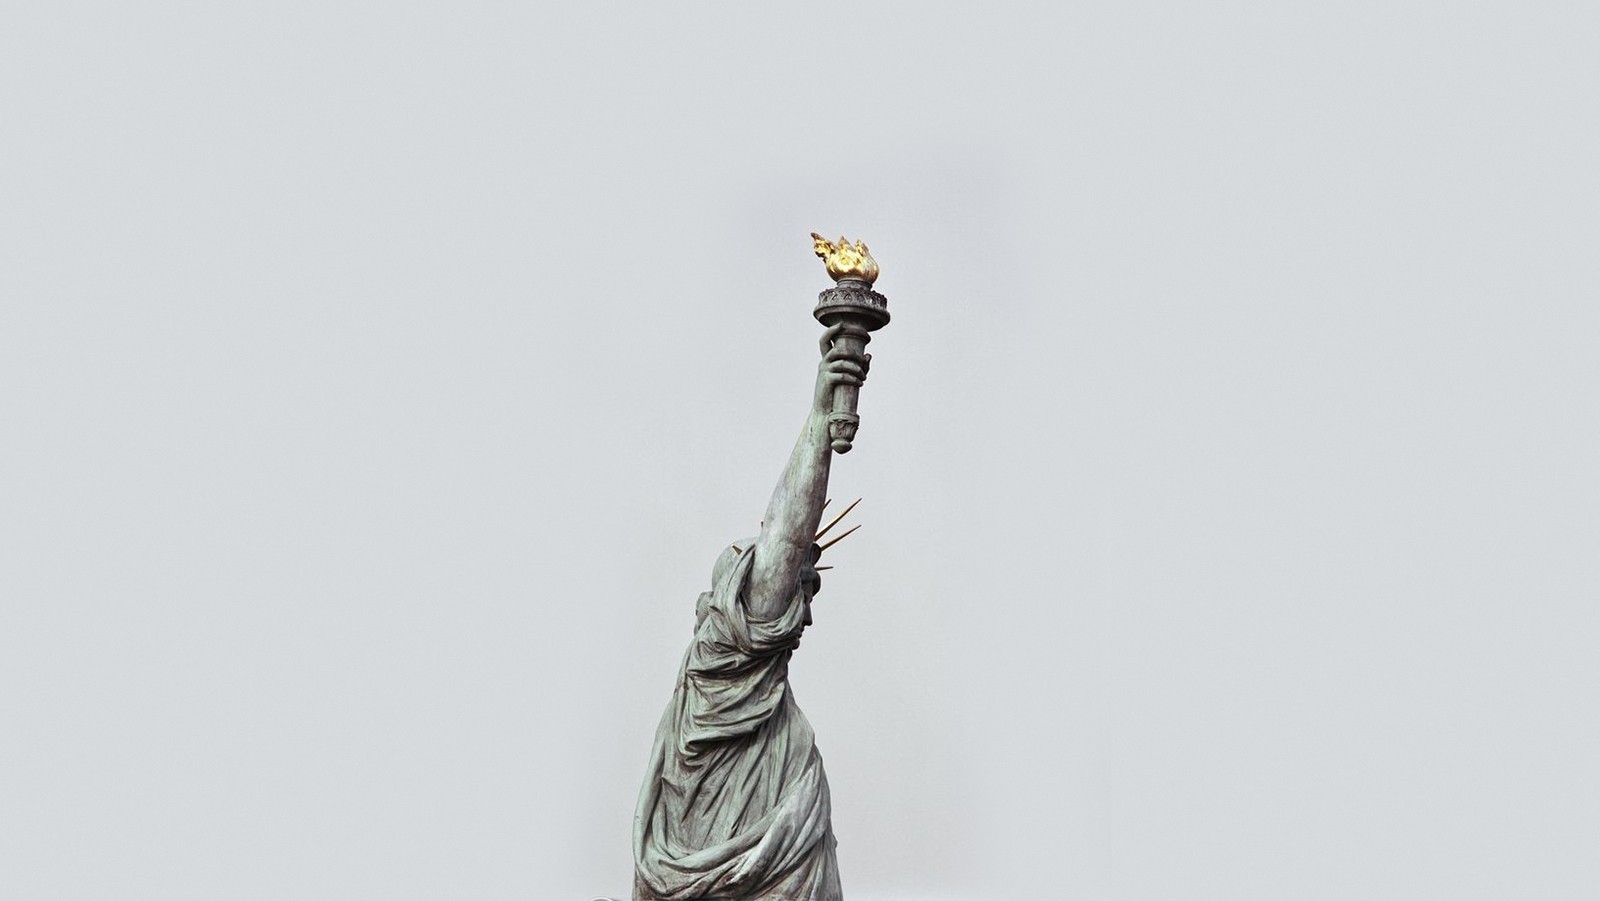 General 1600x901 Statue of Liberty statue New York City USA landmark North America